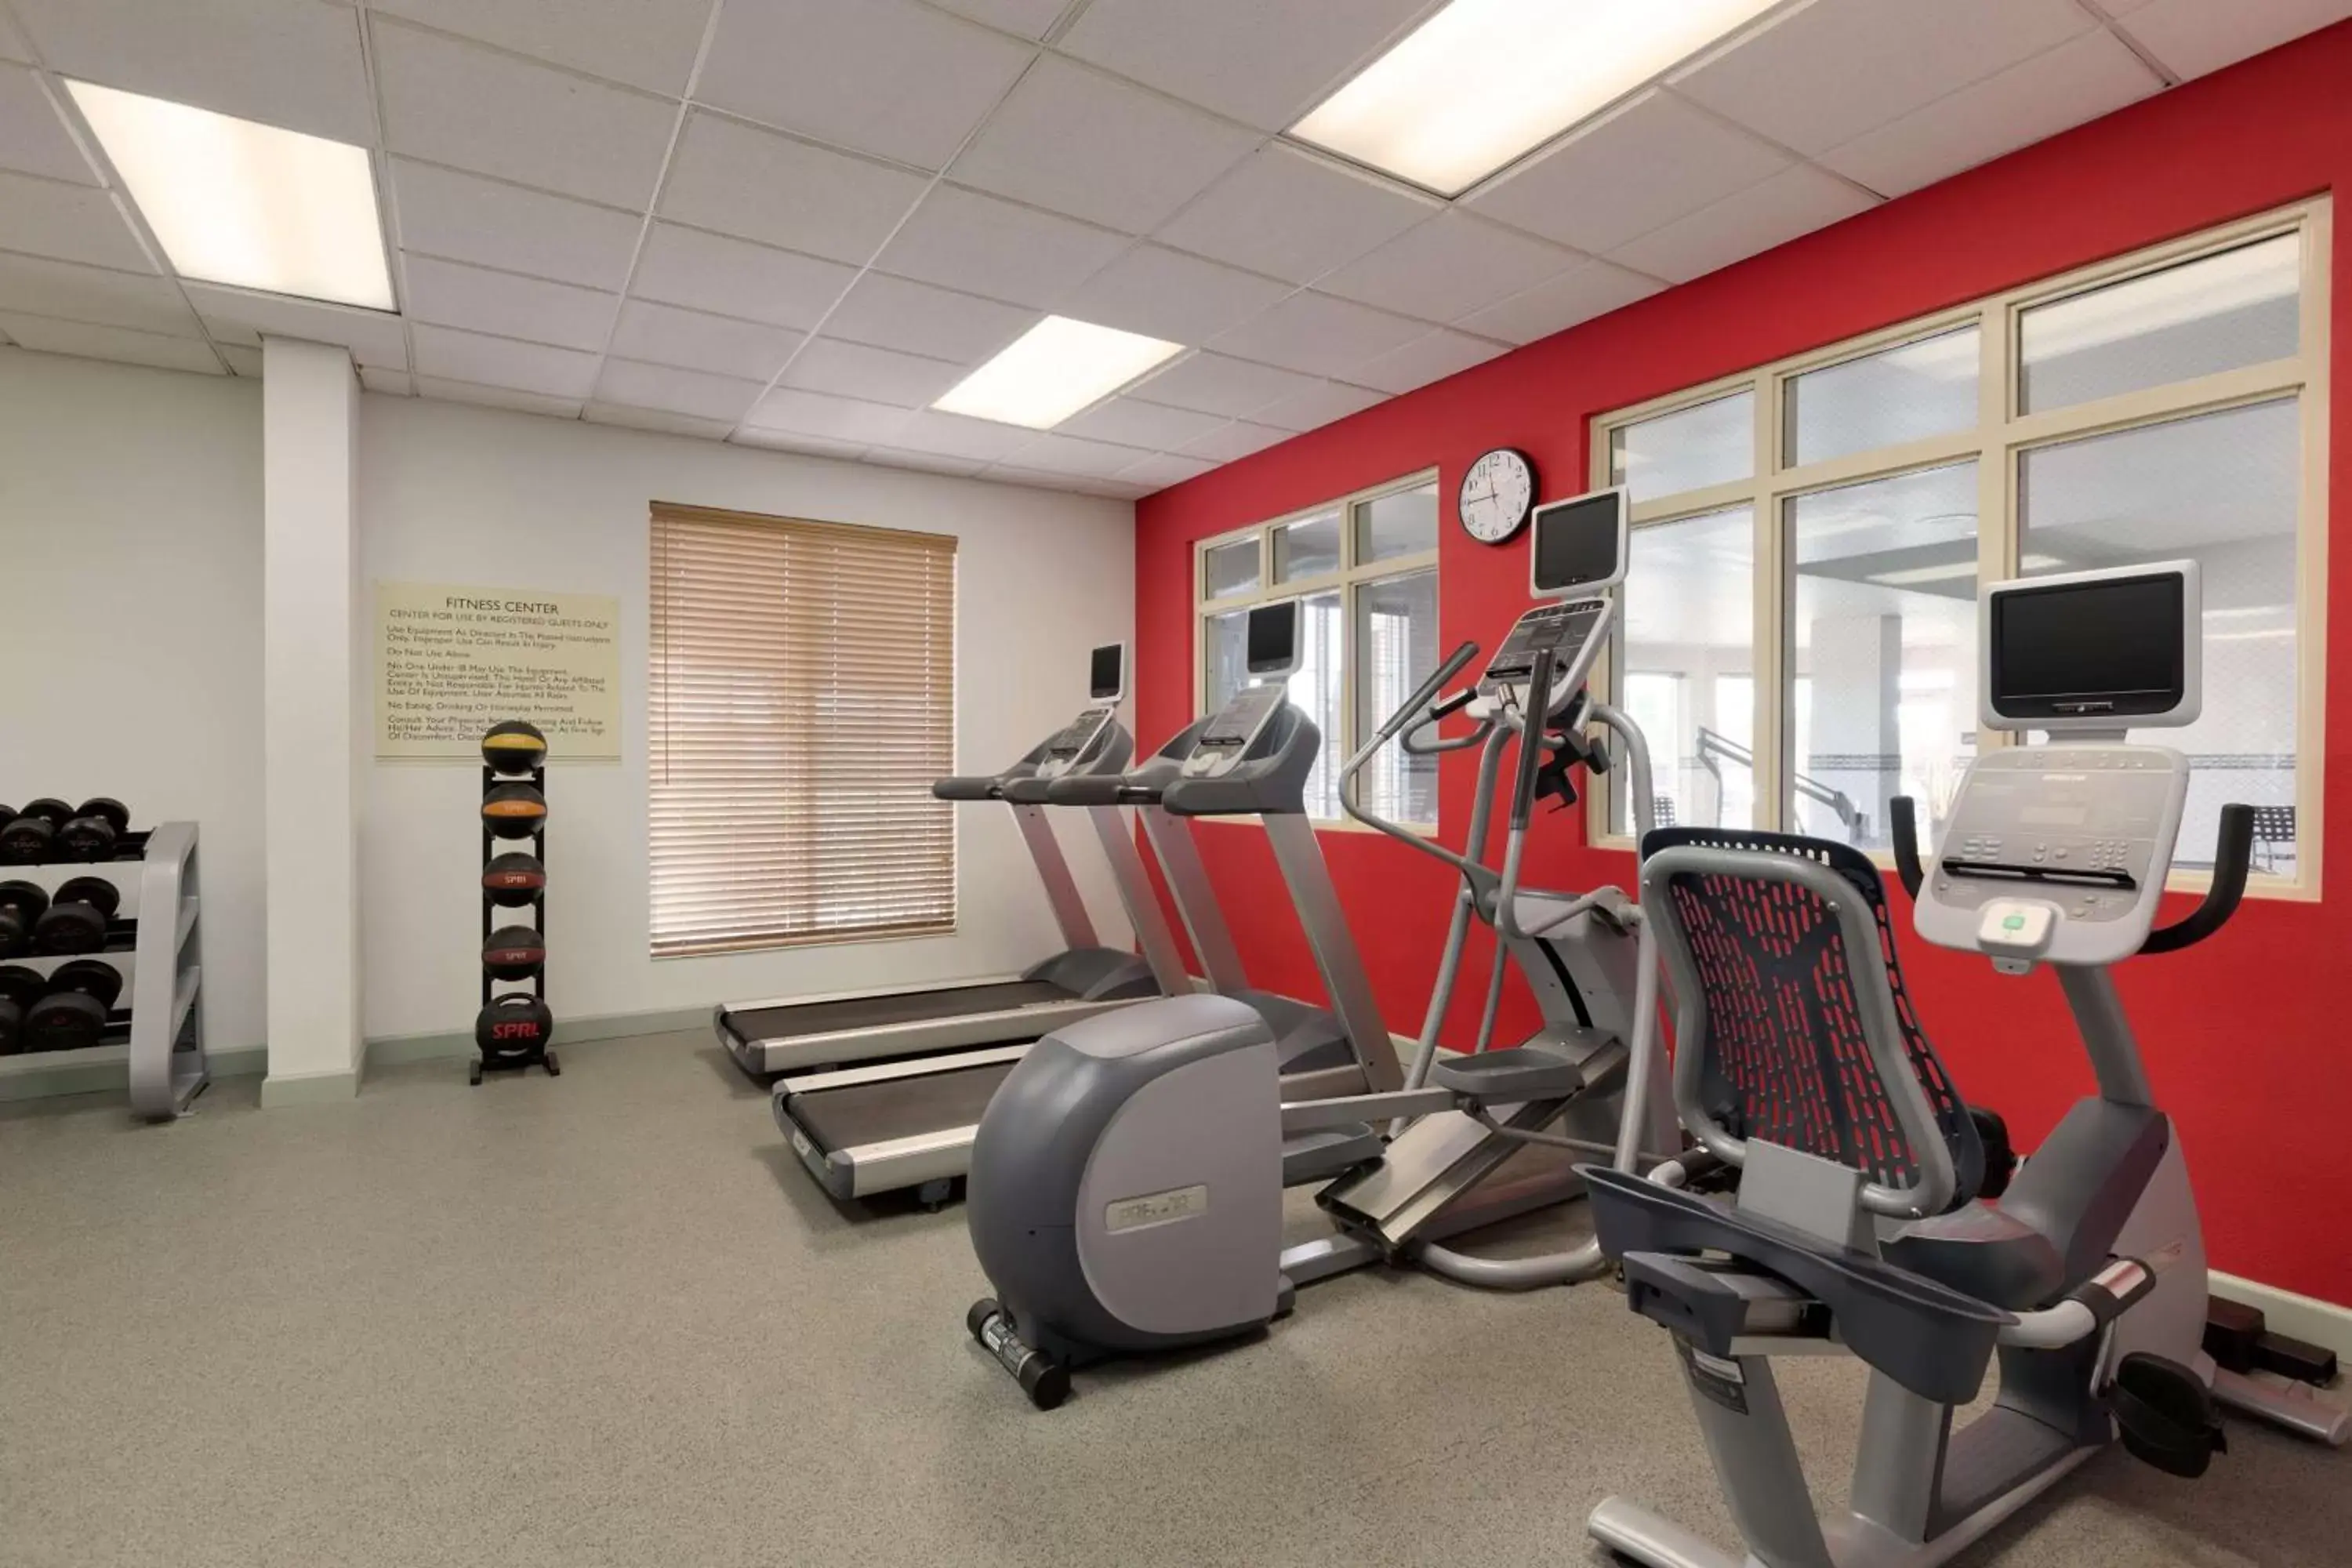 Fitness centre/facilities, Fitness Center/Facilities in Hilton Garden Inn Fredericksburg